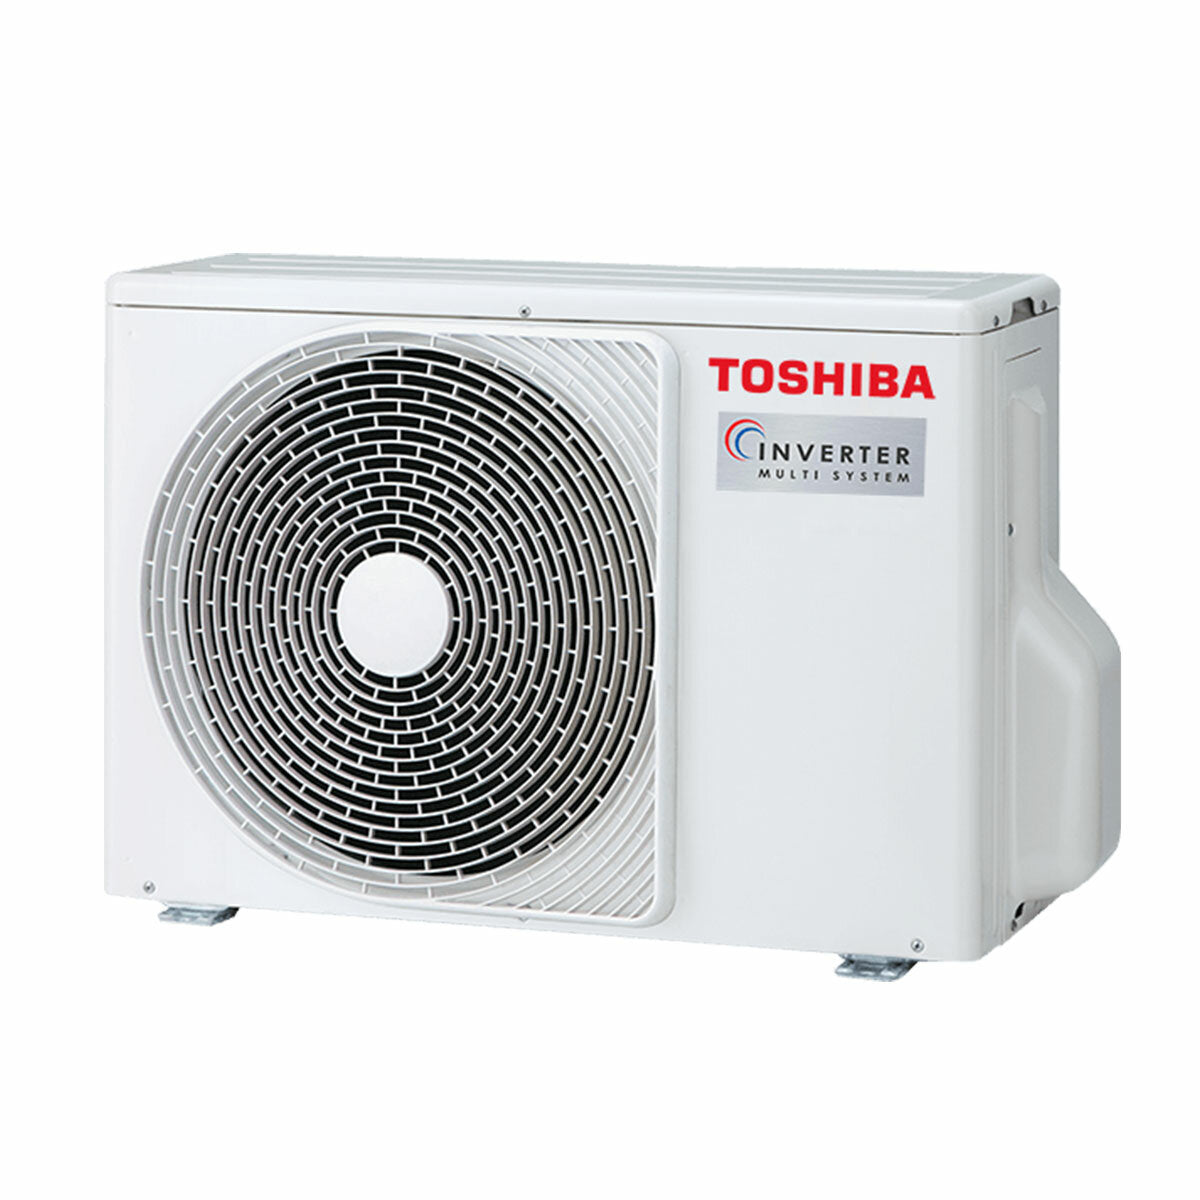 Toshiba Console J2 trial split air conditioner 9000+12000+12000 BTU inverter A+++ external unit 7 kW